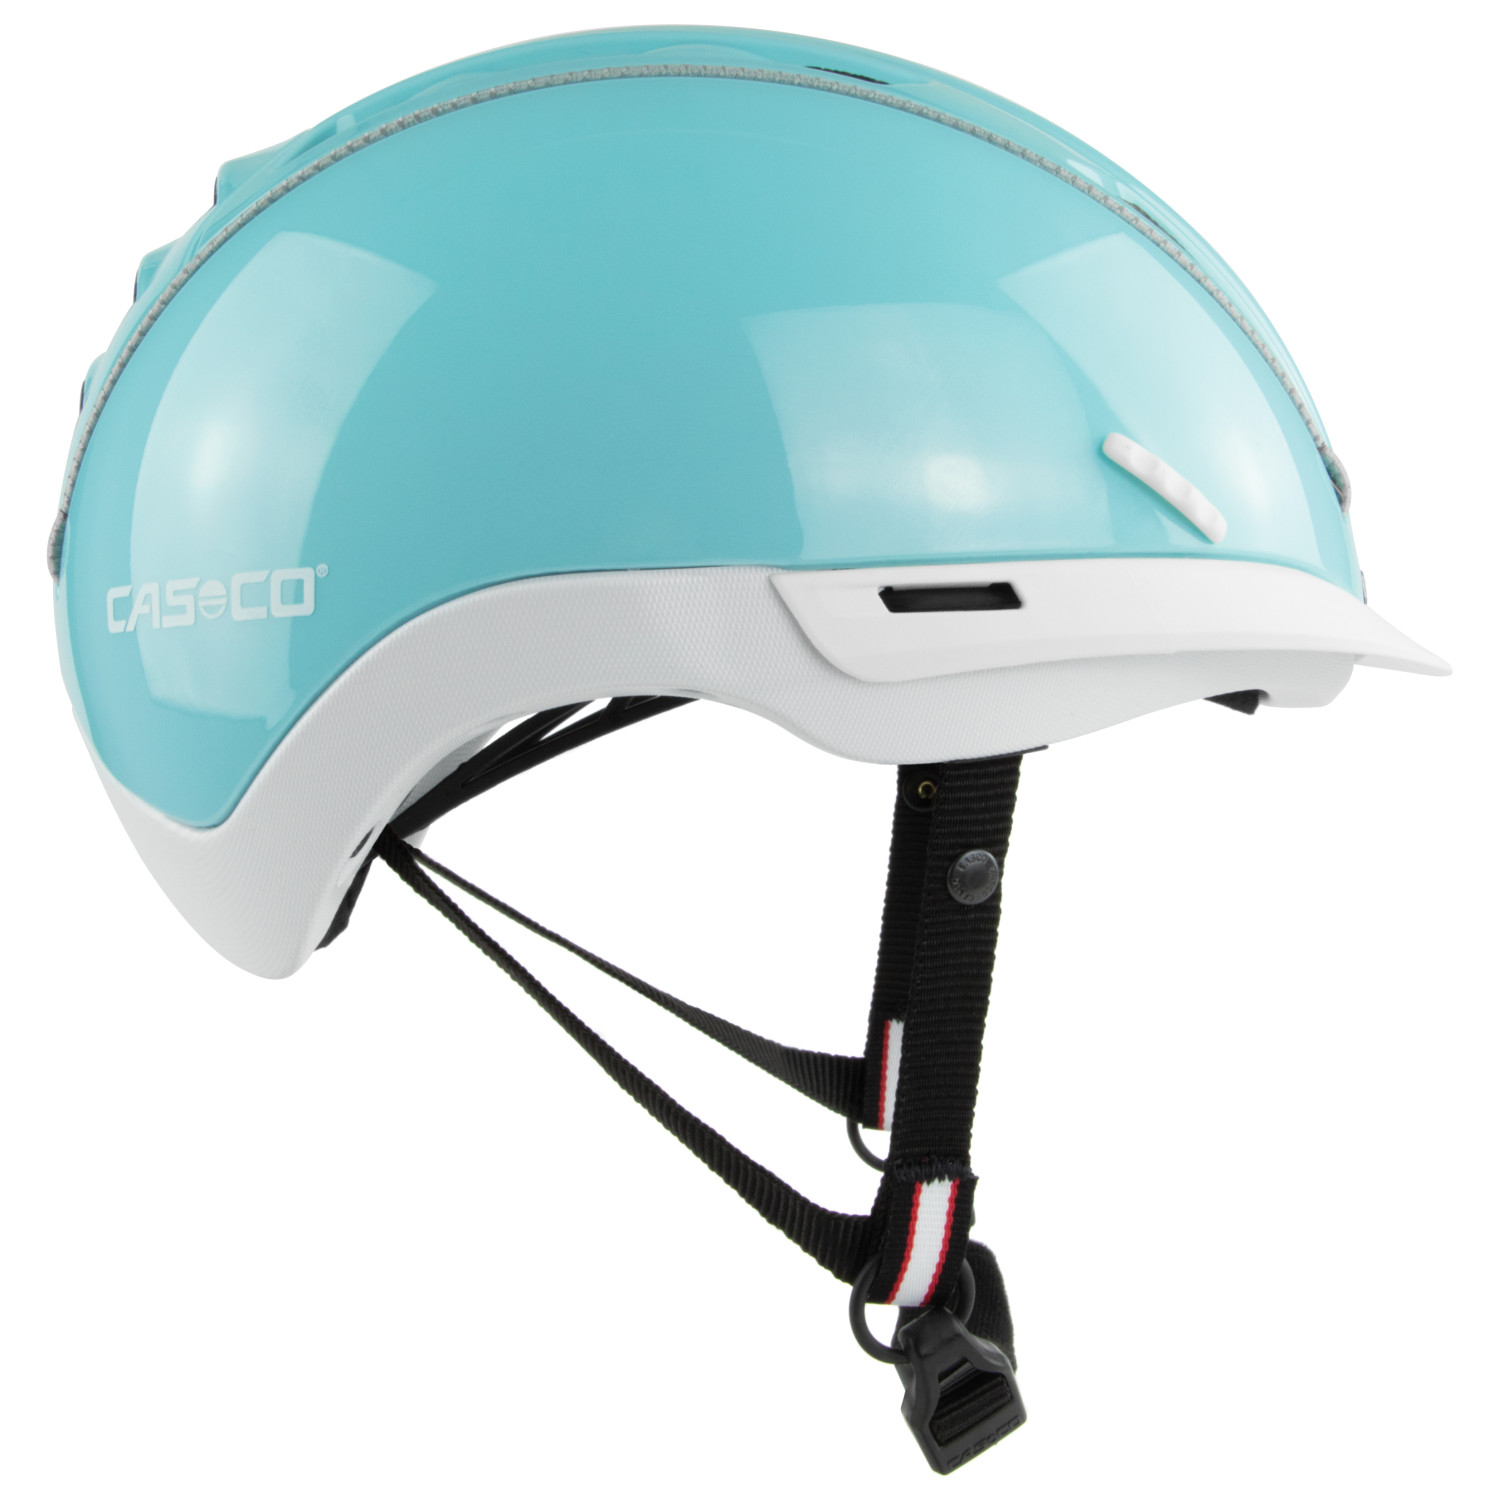 Велосипедный шлем Casco Roadster, цвет Light Blue/White шлем casco roadster 18 04 3607 xl